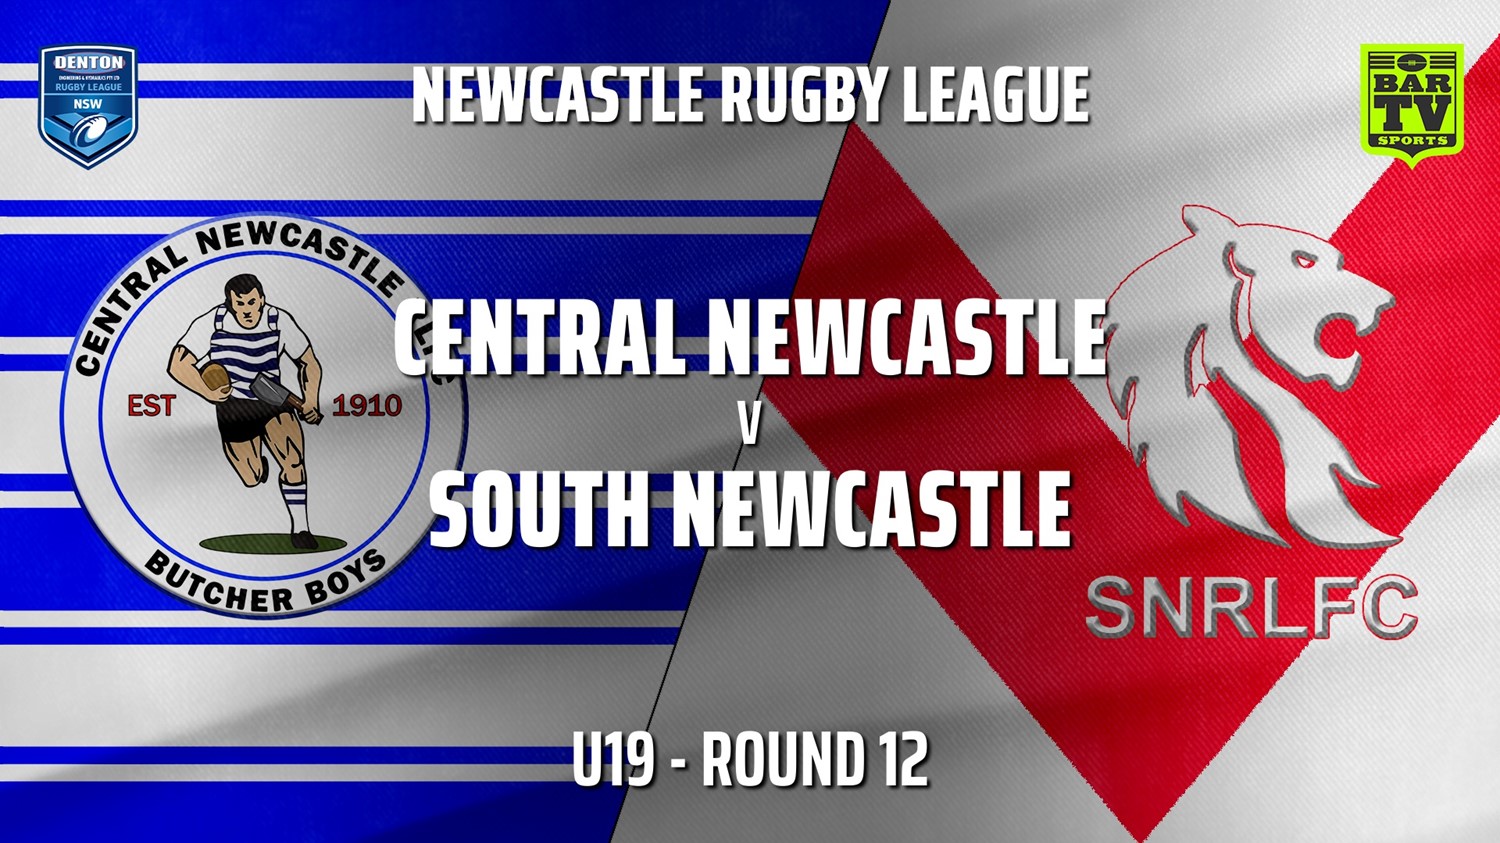 210620-Newcastle Round 12 - U19 - Central Newcastle v South Newcastle Slate Image